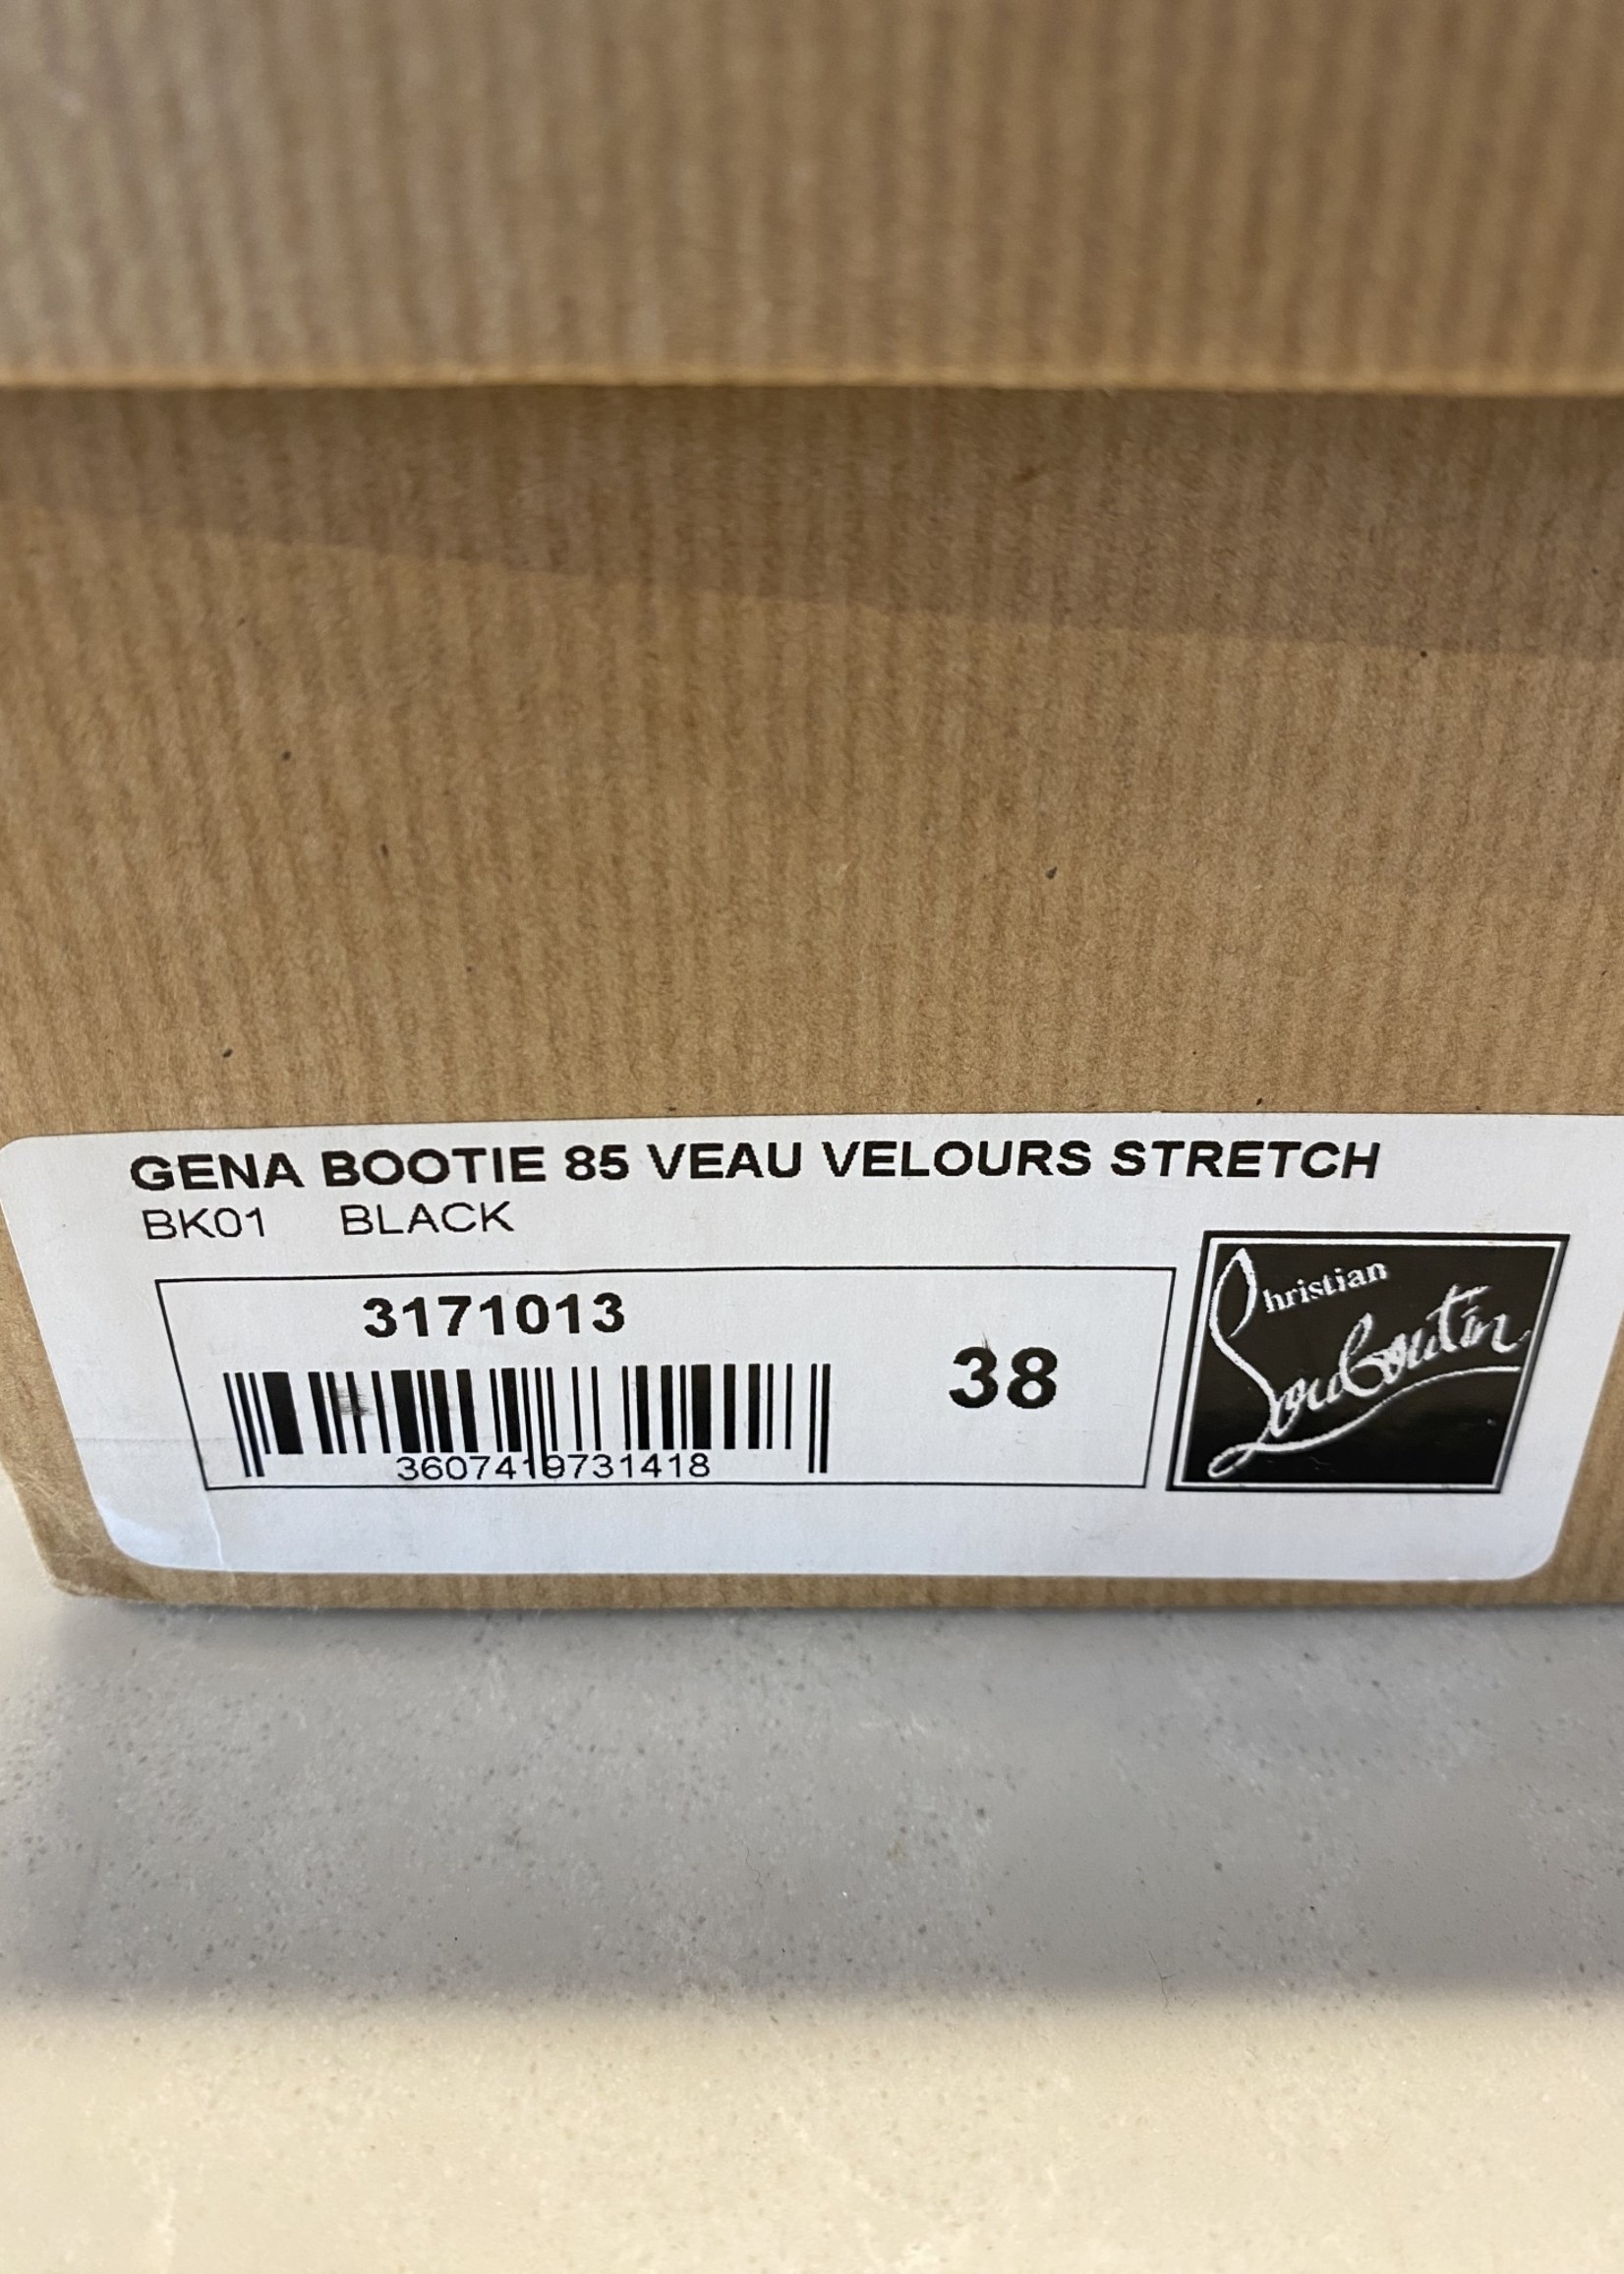 Christian Louboutin 'Gena' Bootie in Black Suede 38 (Retail: $895)